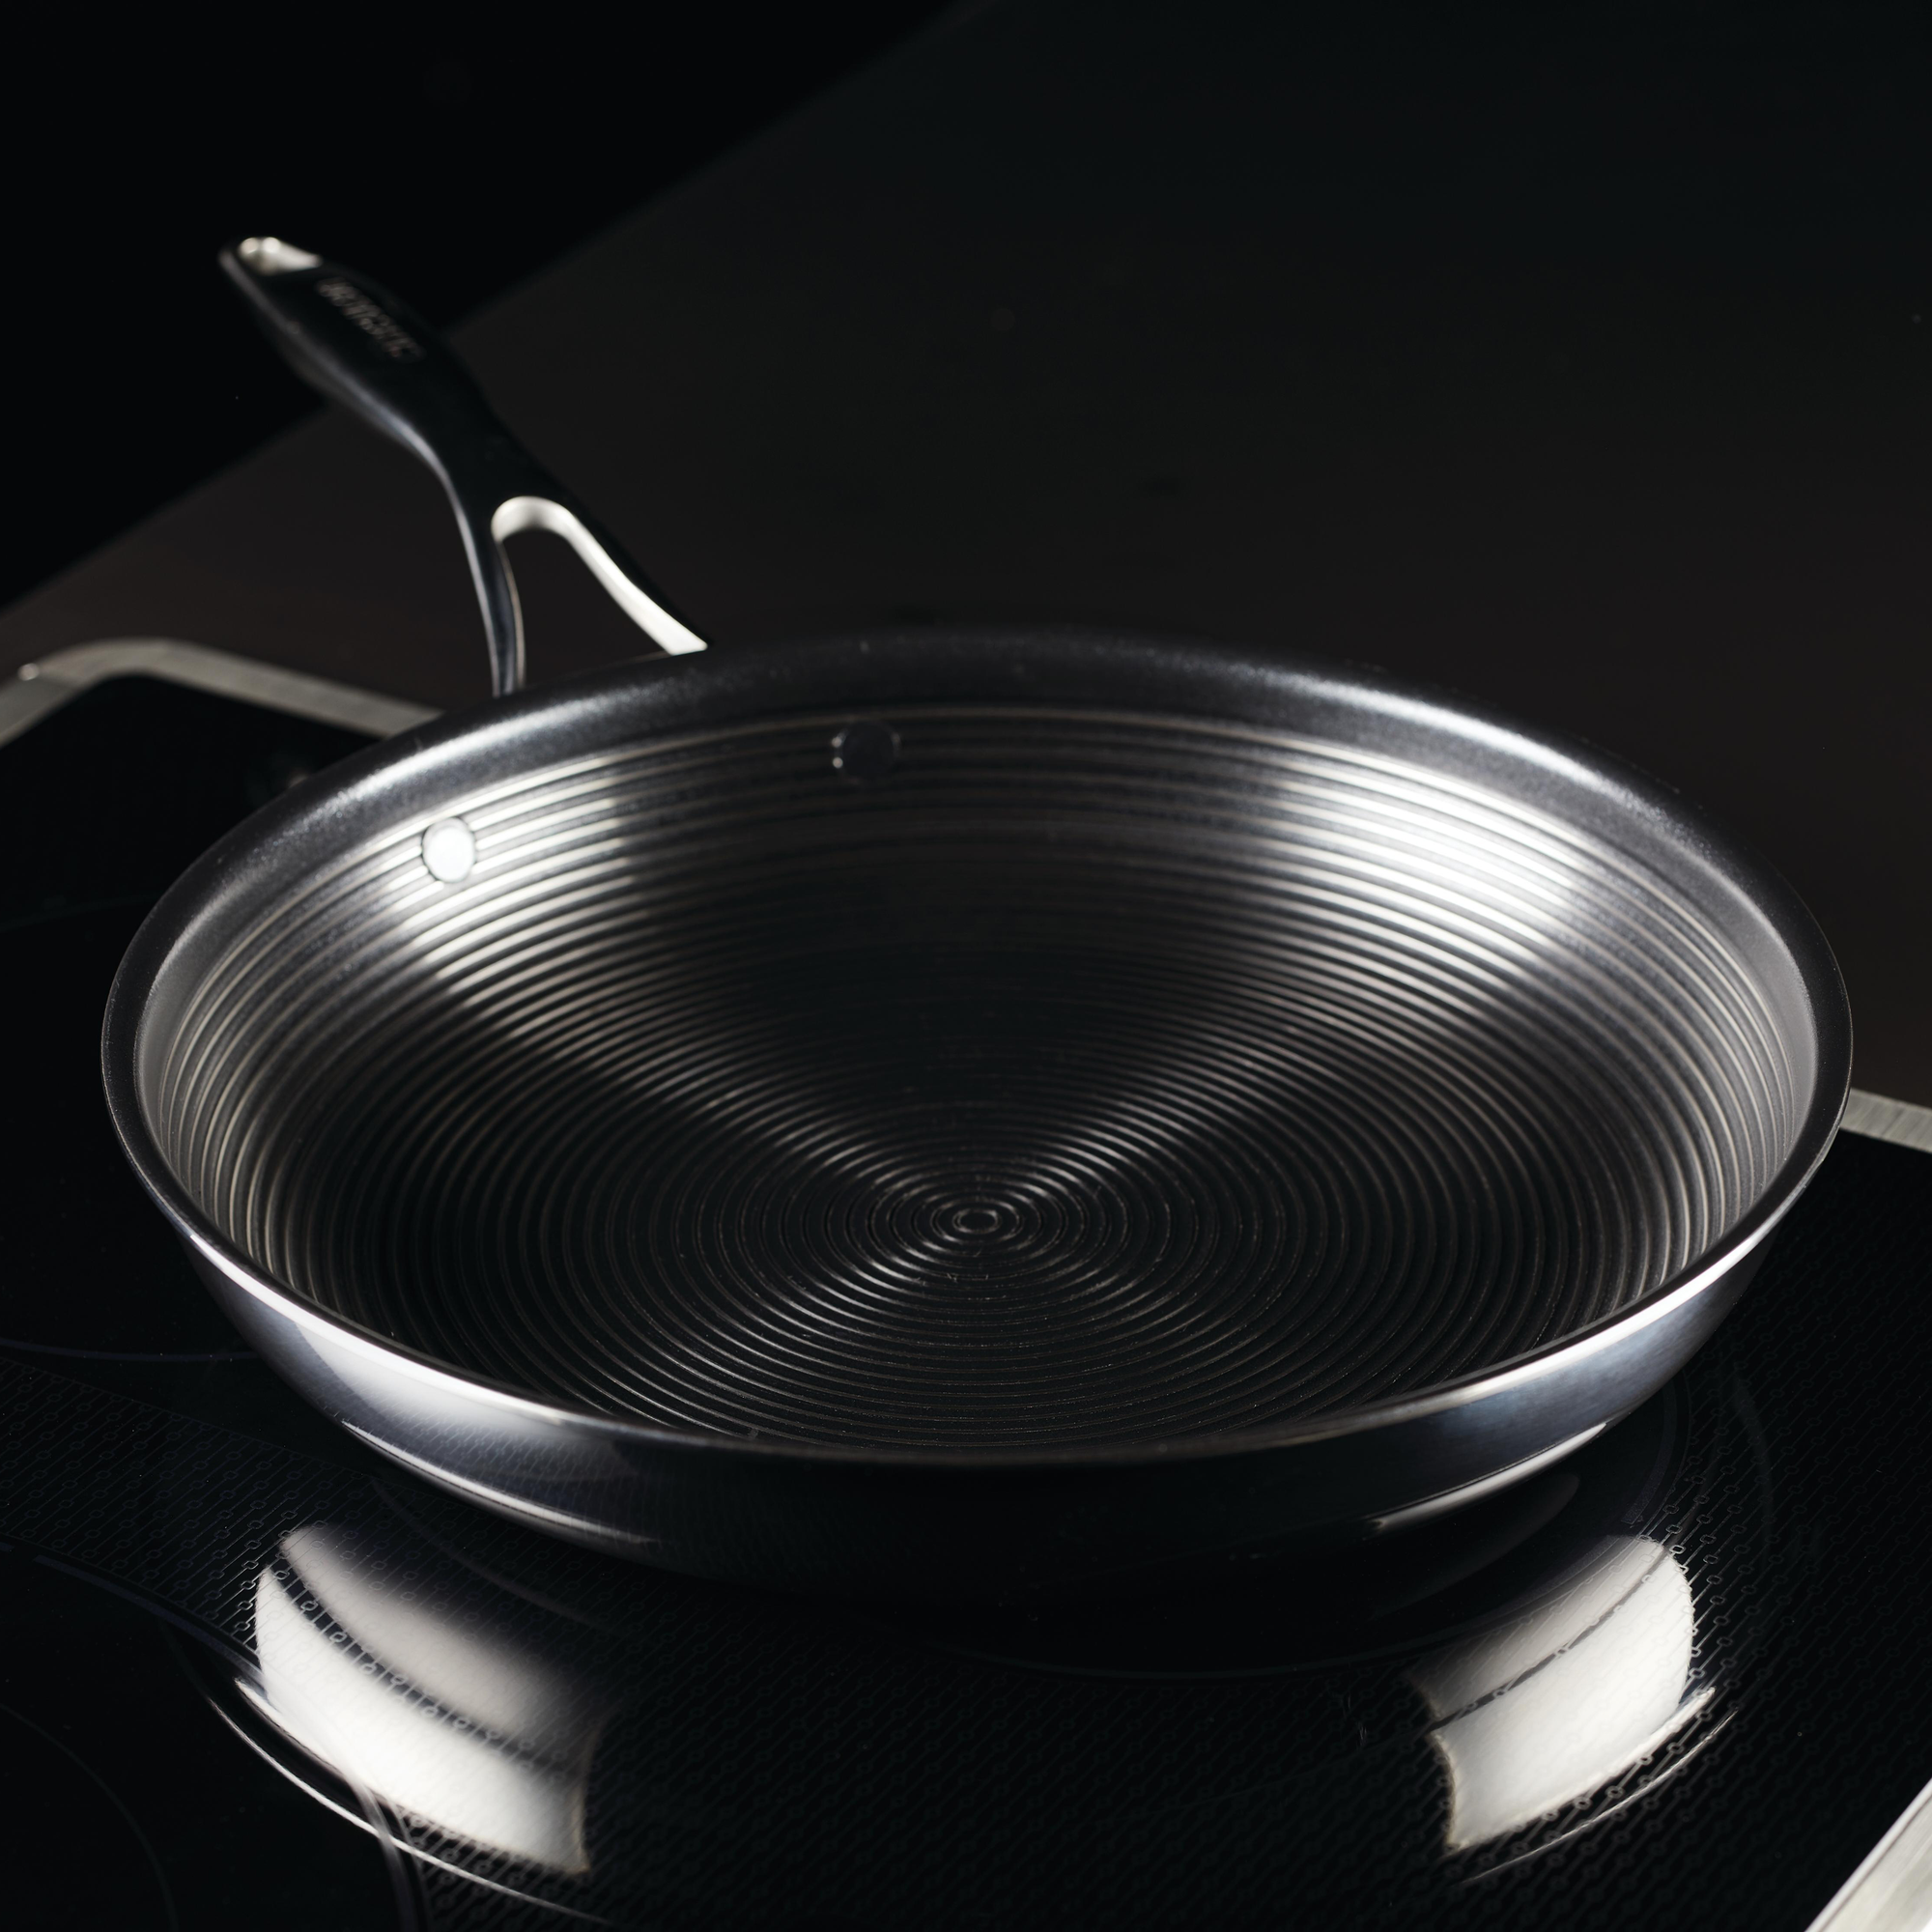  Black Cube Stainless Steel 12.5-inch Frying Pan, 3 Ply  Professional Grade Steel Skillet, Sliver, Dishwasher Safe.: Home & Kitchen